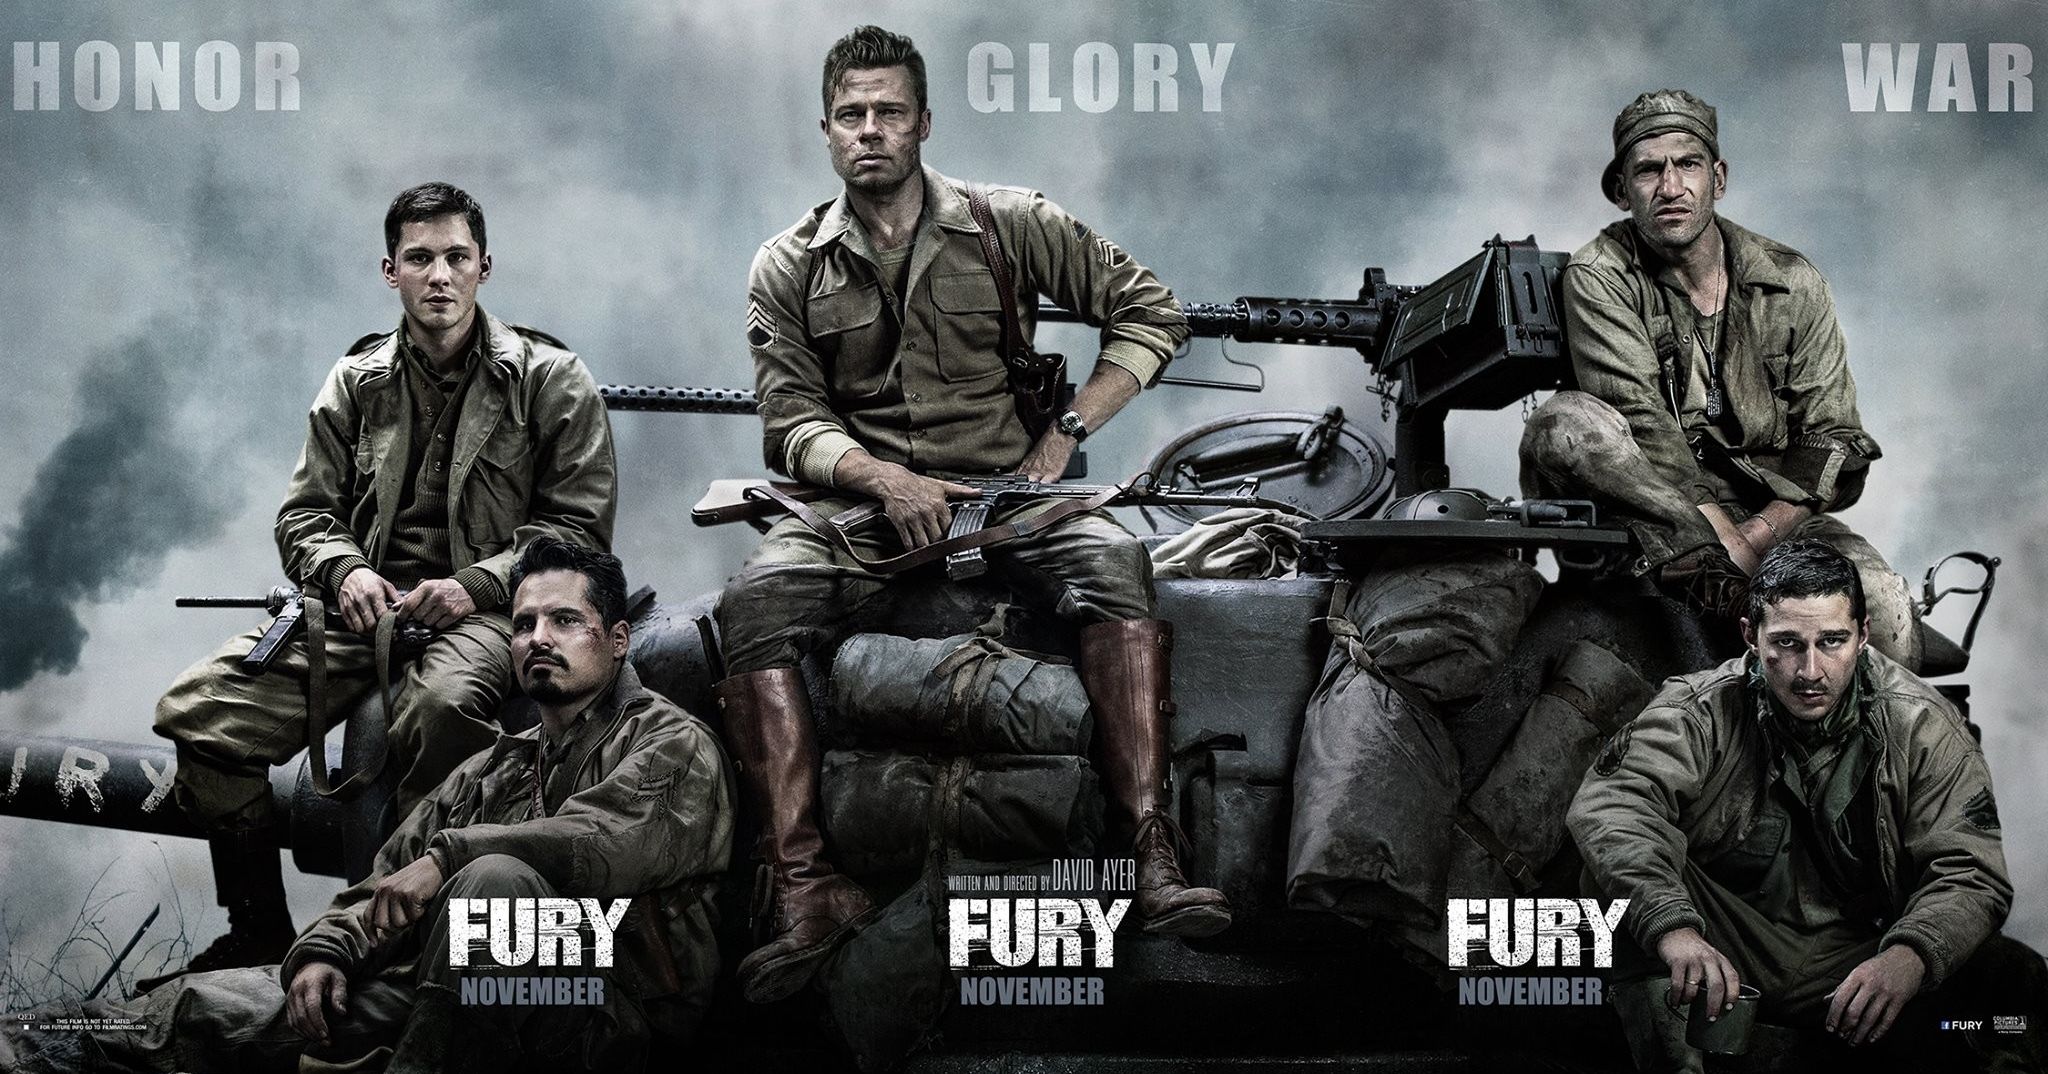 Honer, Glory, War - Fury banner poster